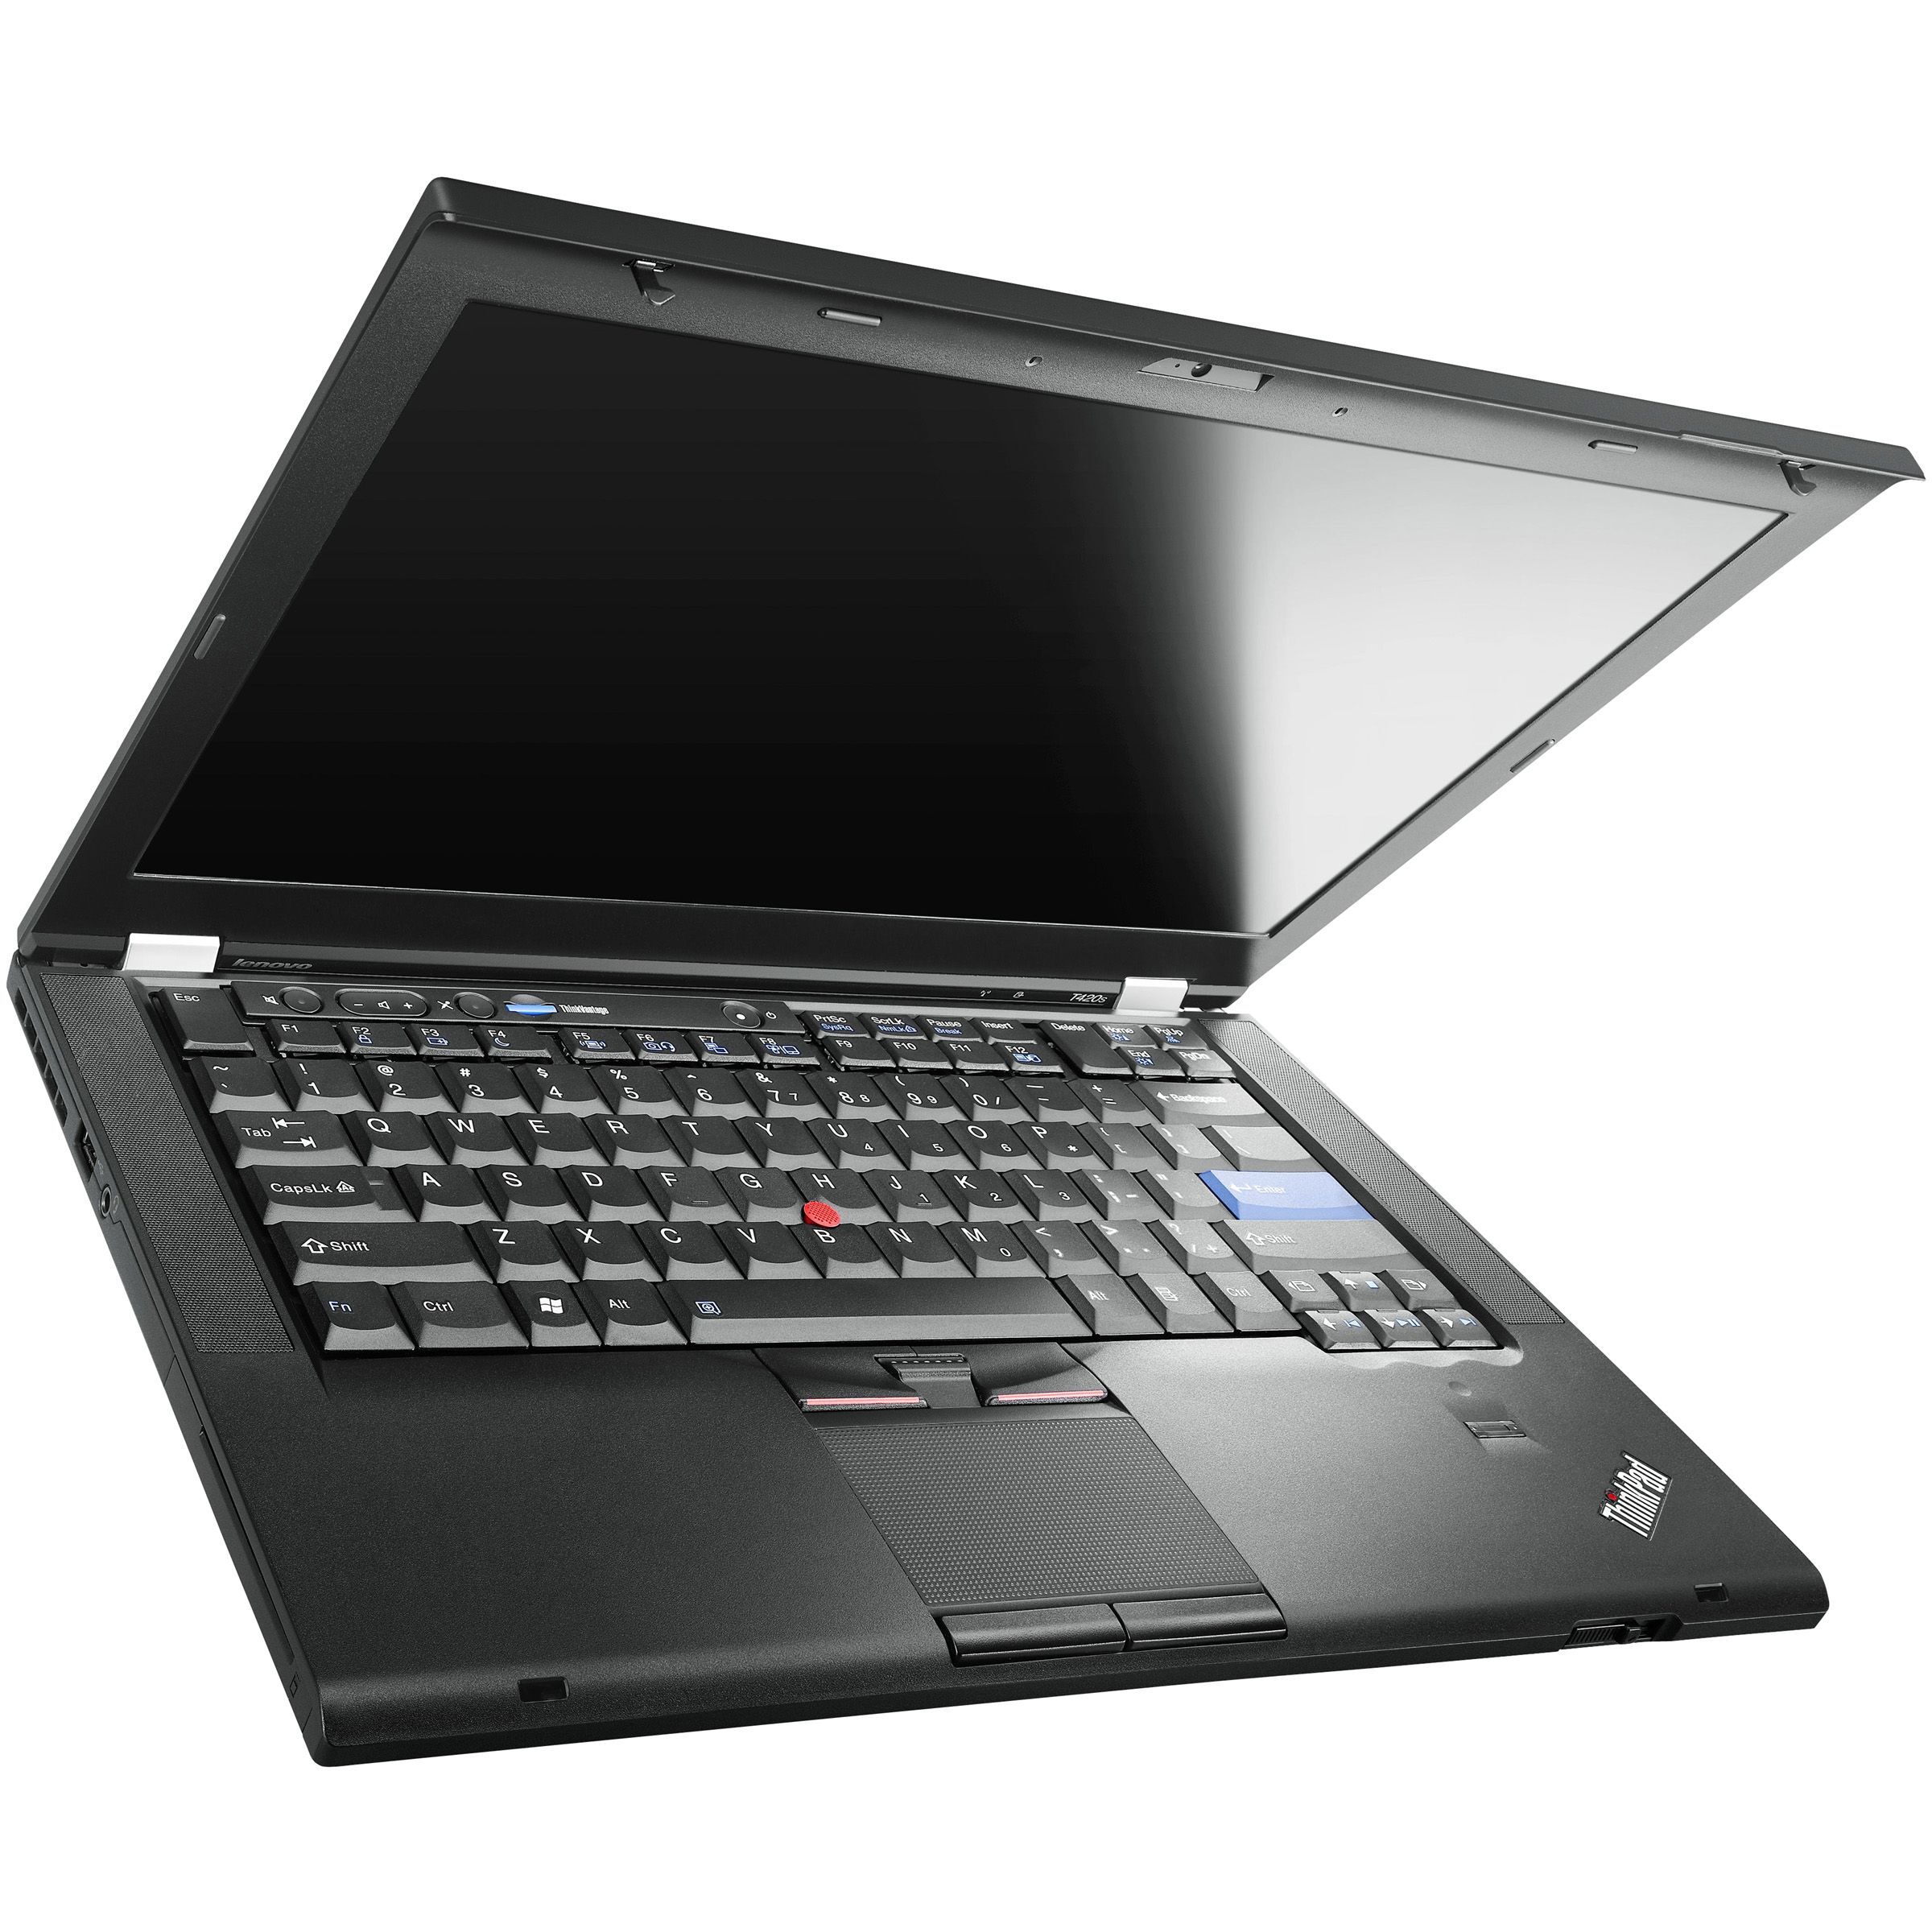 Laptop Lenovo IBM ThinkPad T420S - Intel Core i5-2520M 2.50GHz, 4GB RAM, 320GB HDD, Intel HD Graphic 3000, 14.0 inch